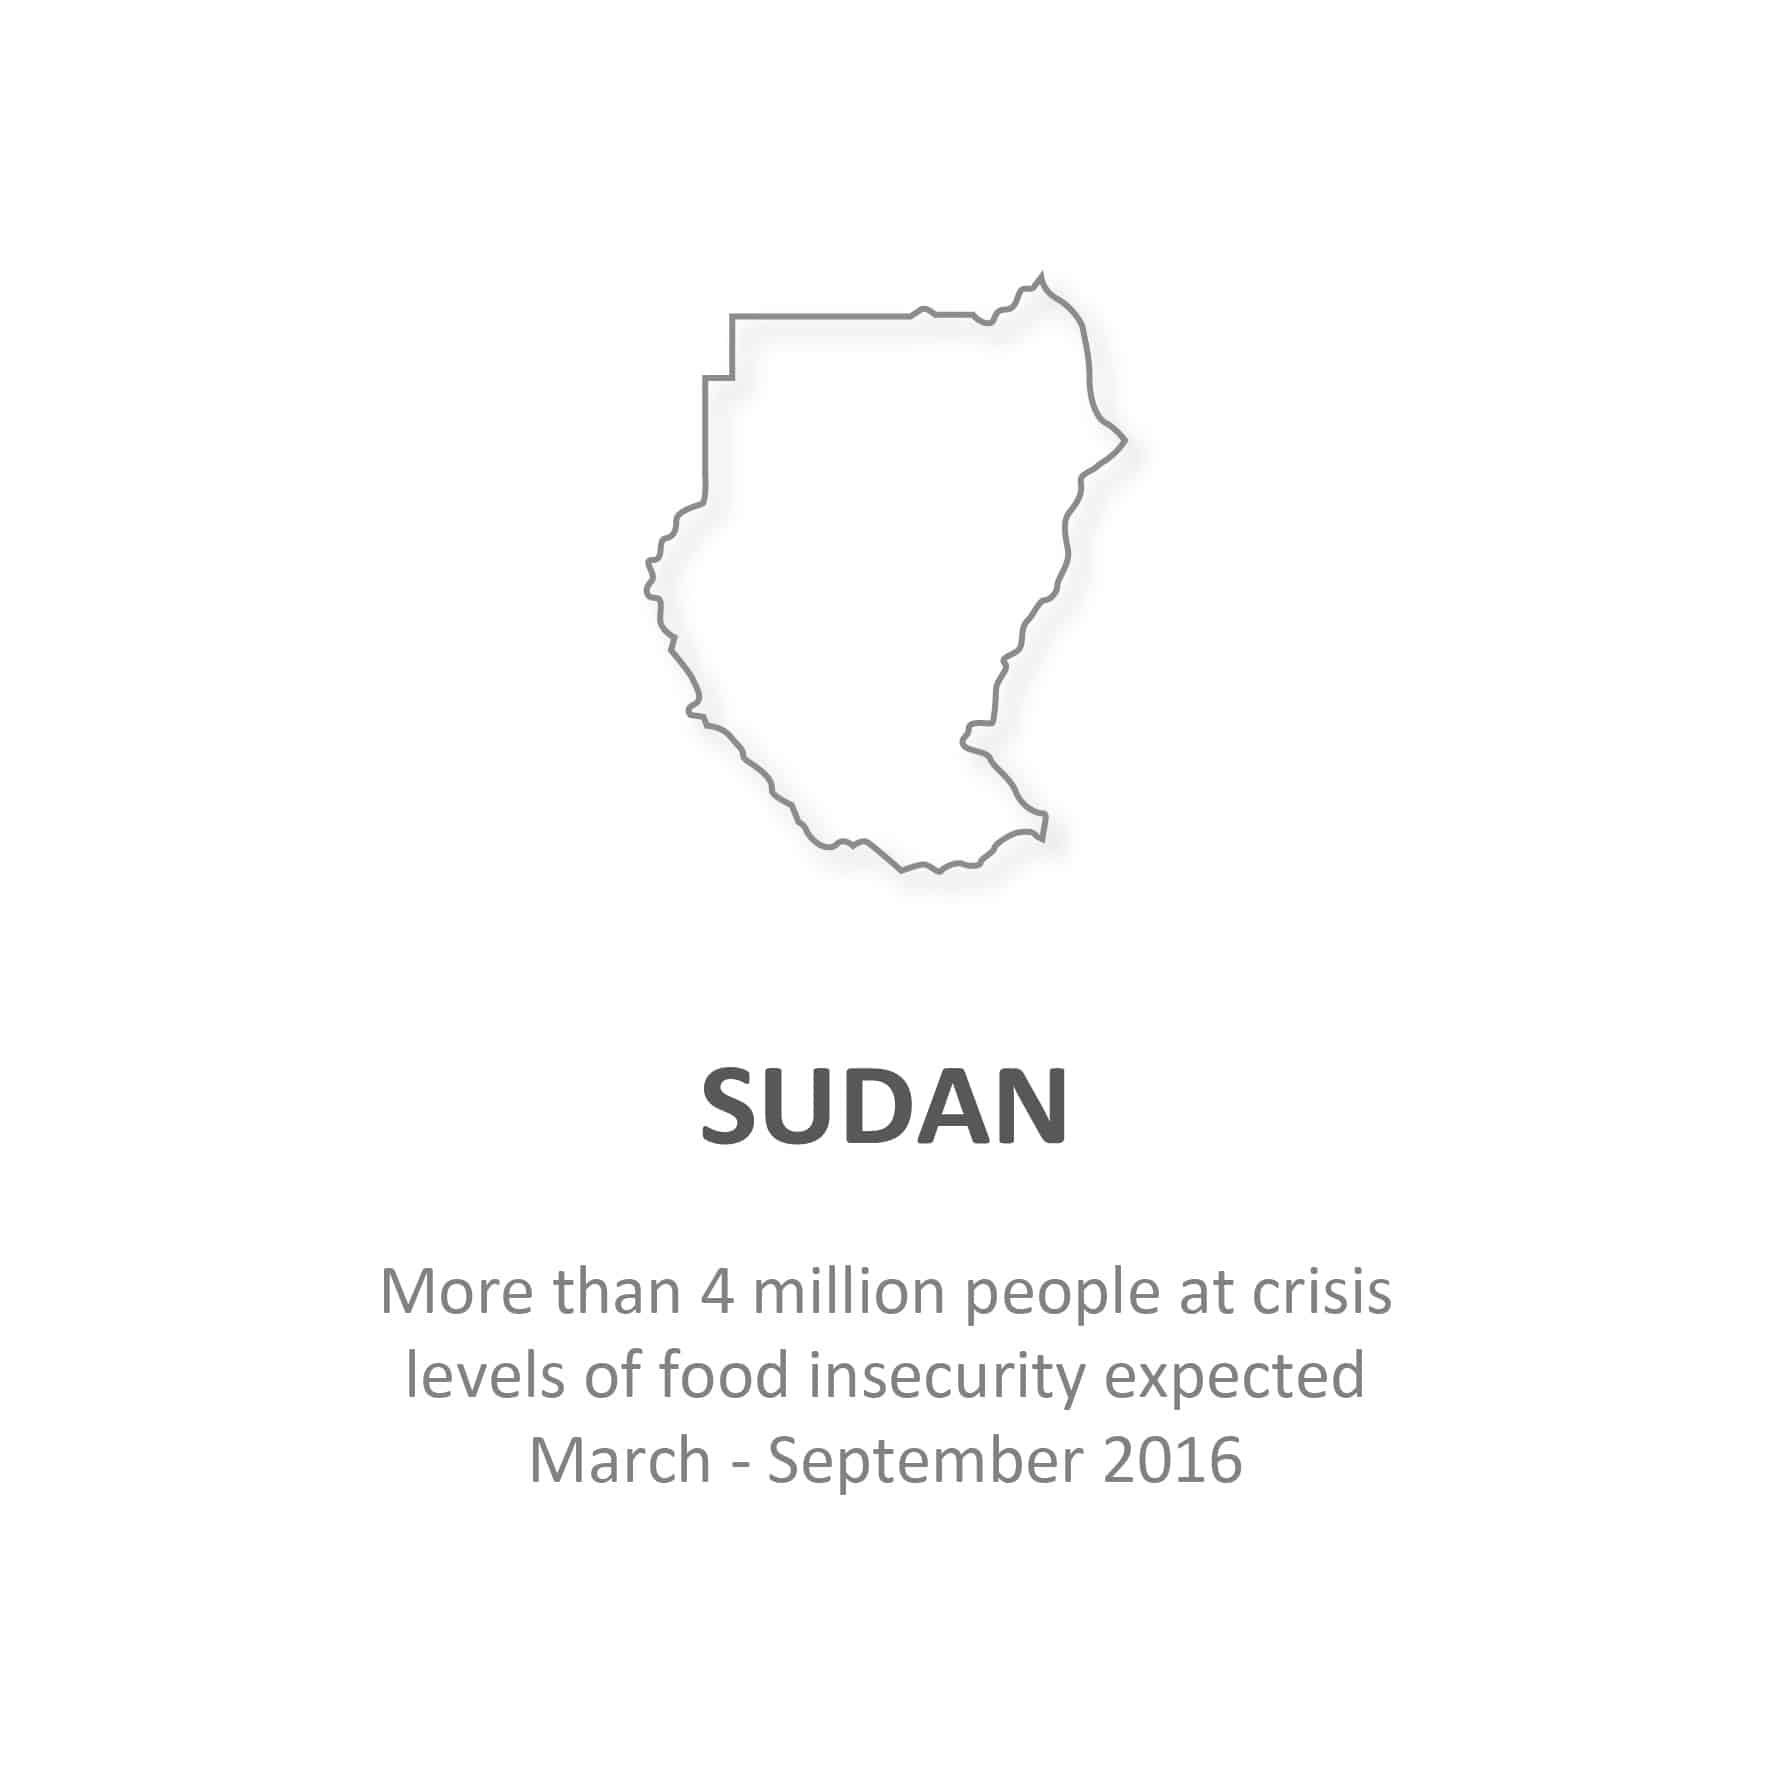 Statistics for Sudan